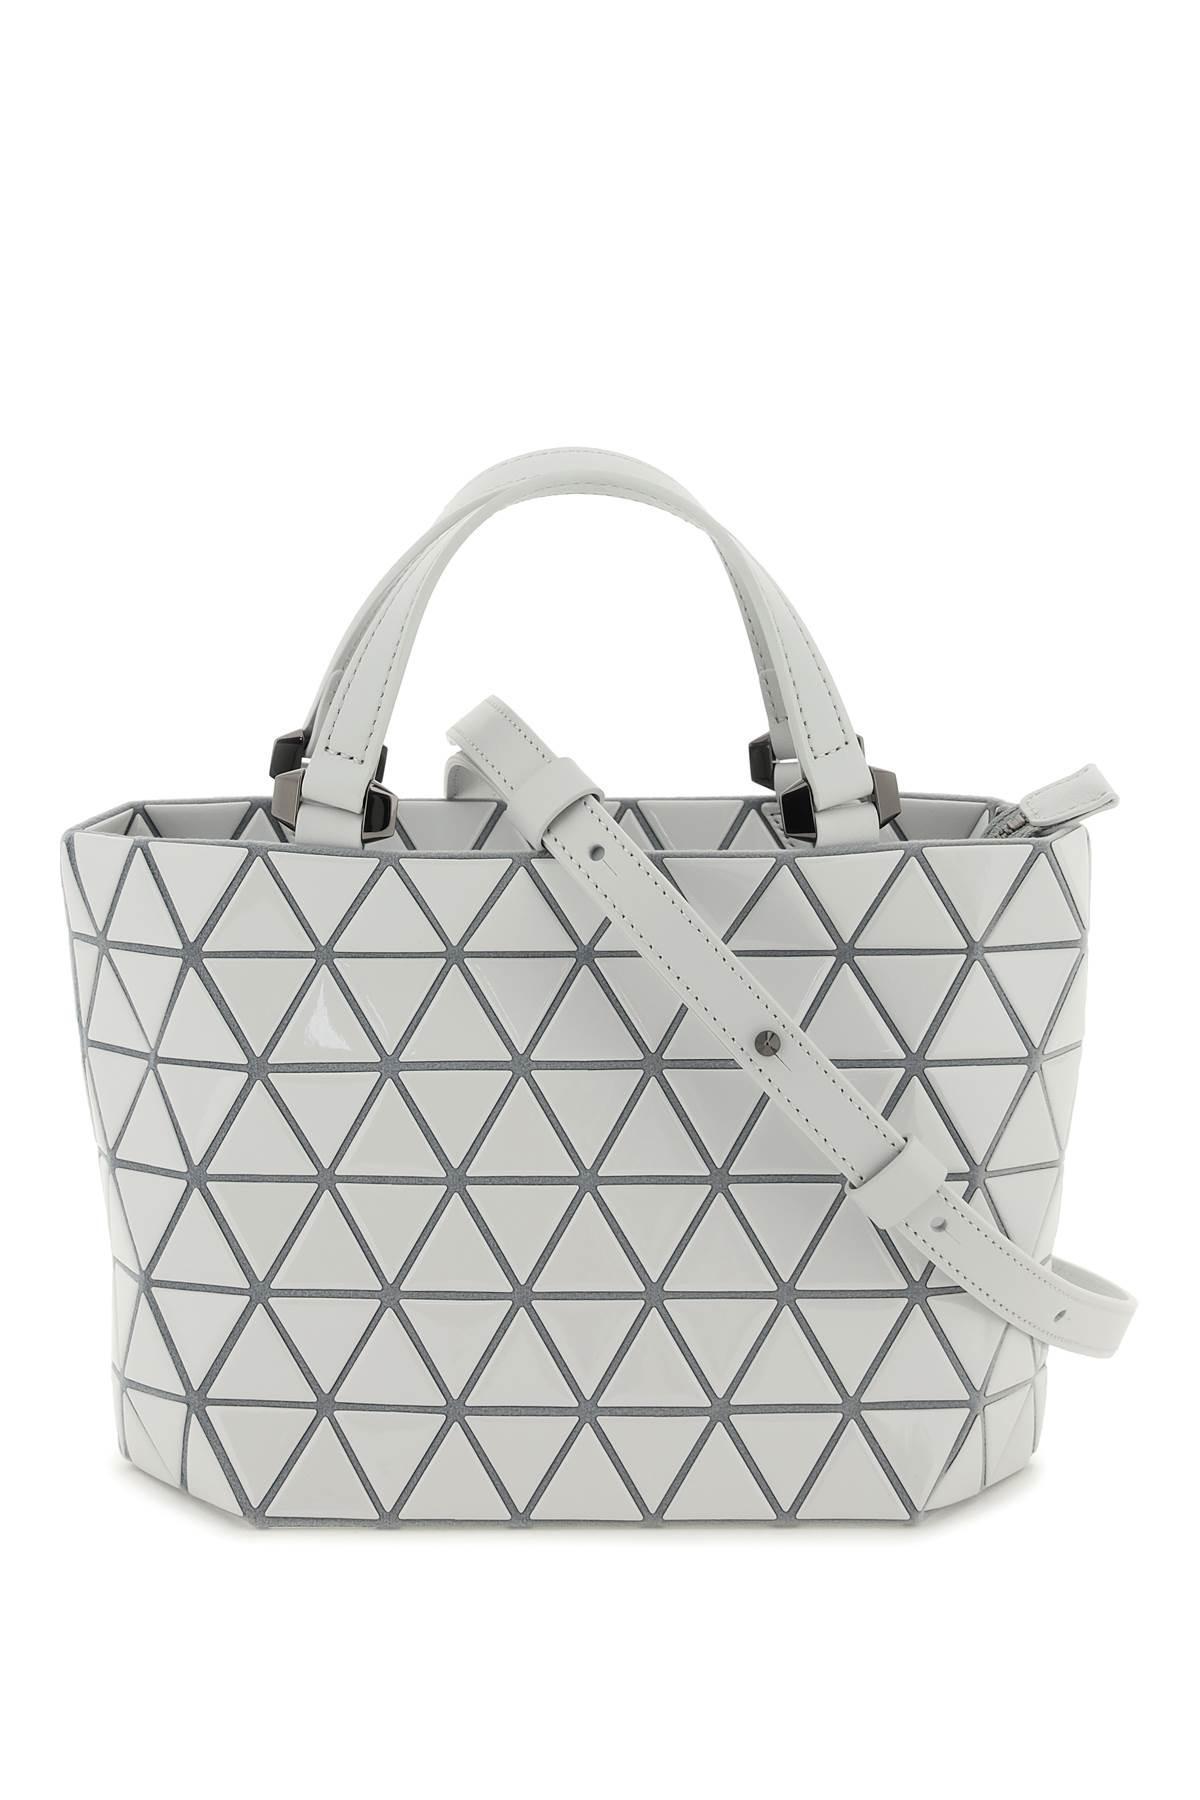 BAO BAO ISSEY MIYAKE Silver Prism Style Tote Purse Bag Rectangle EUC | eBay